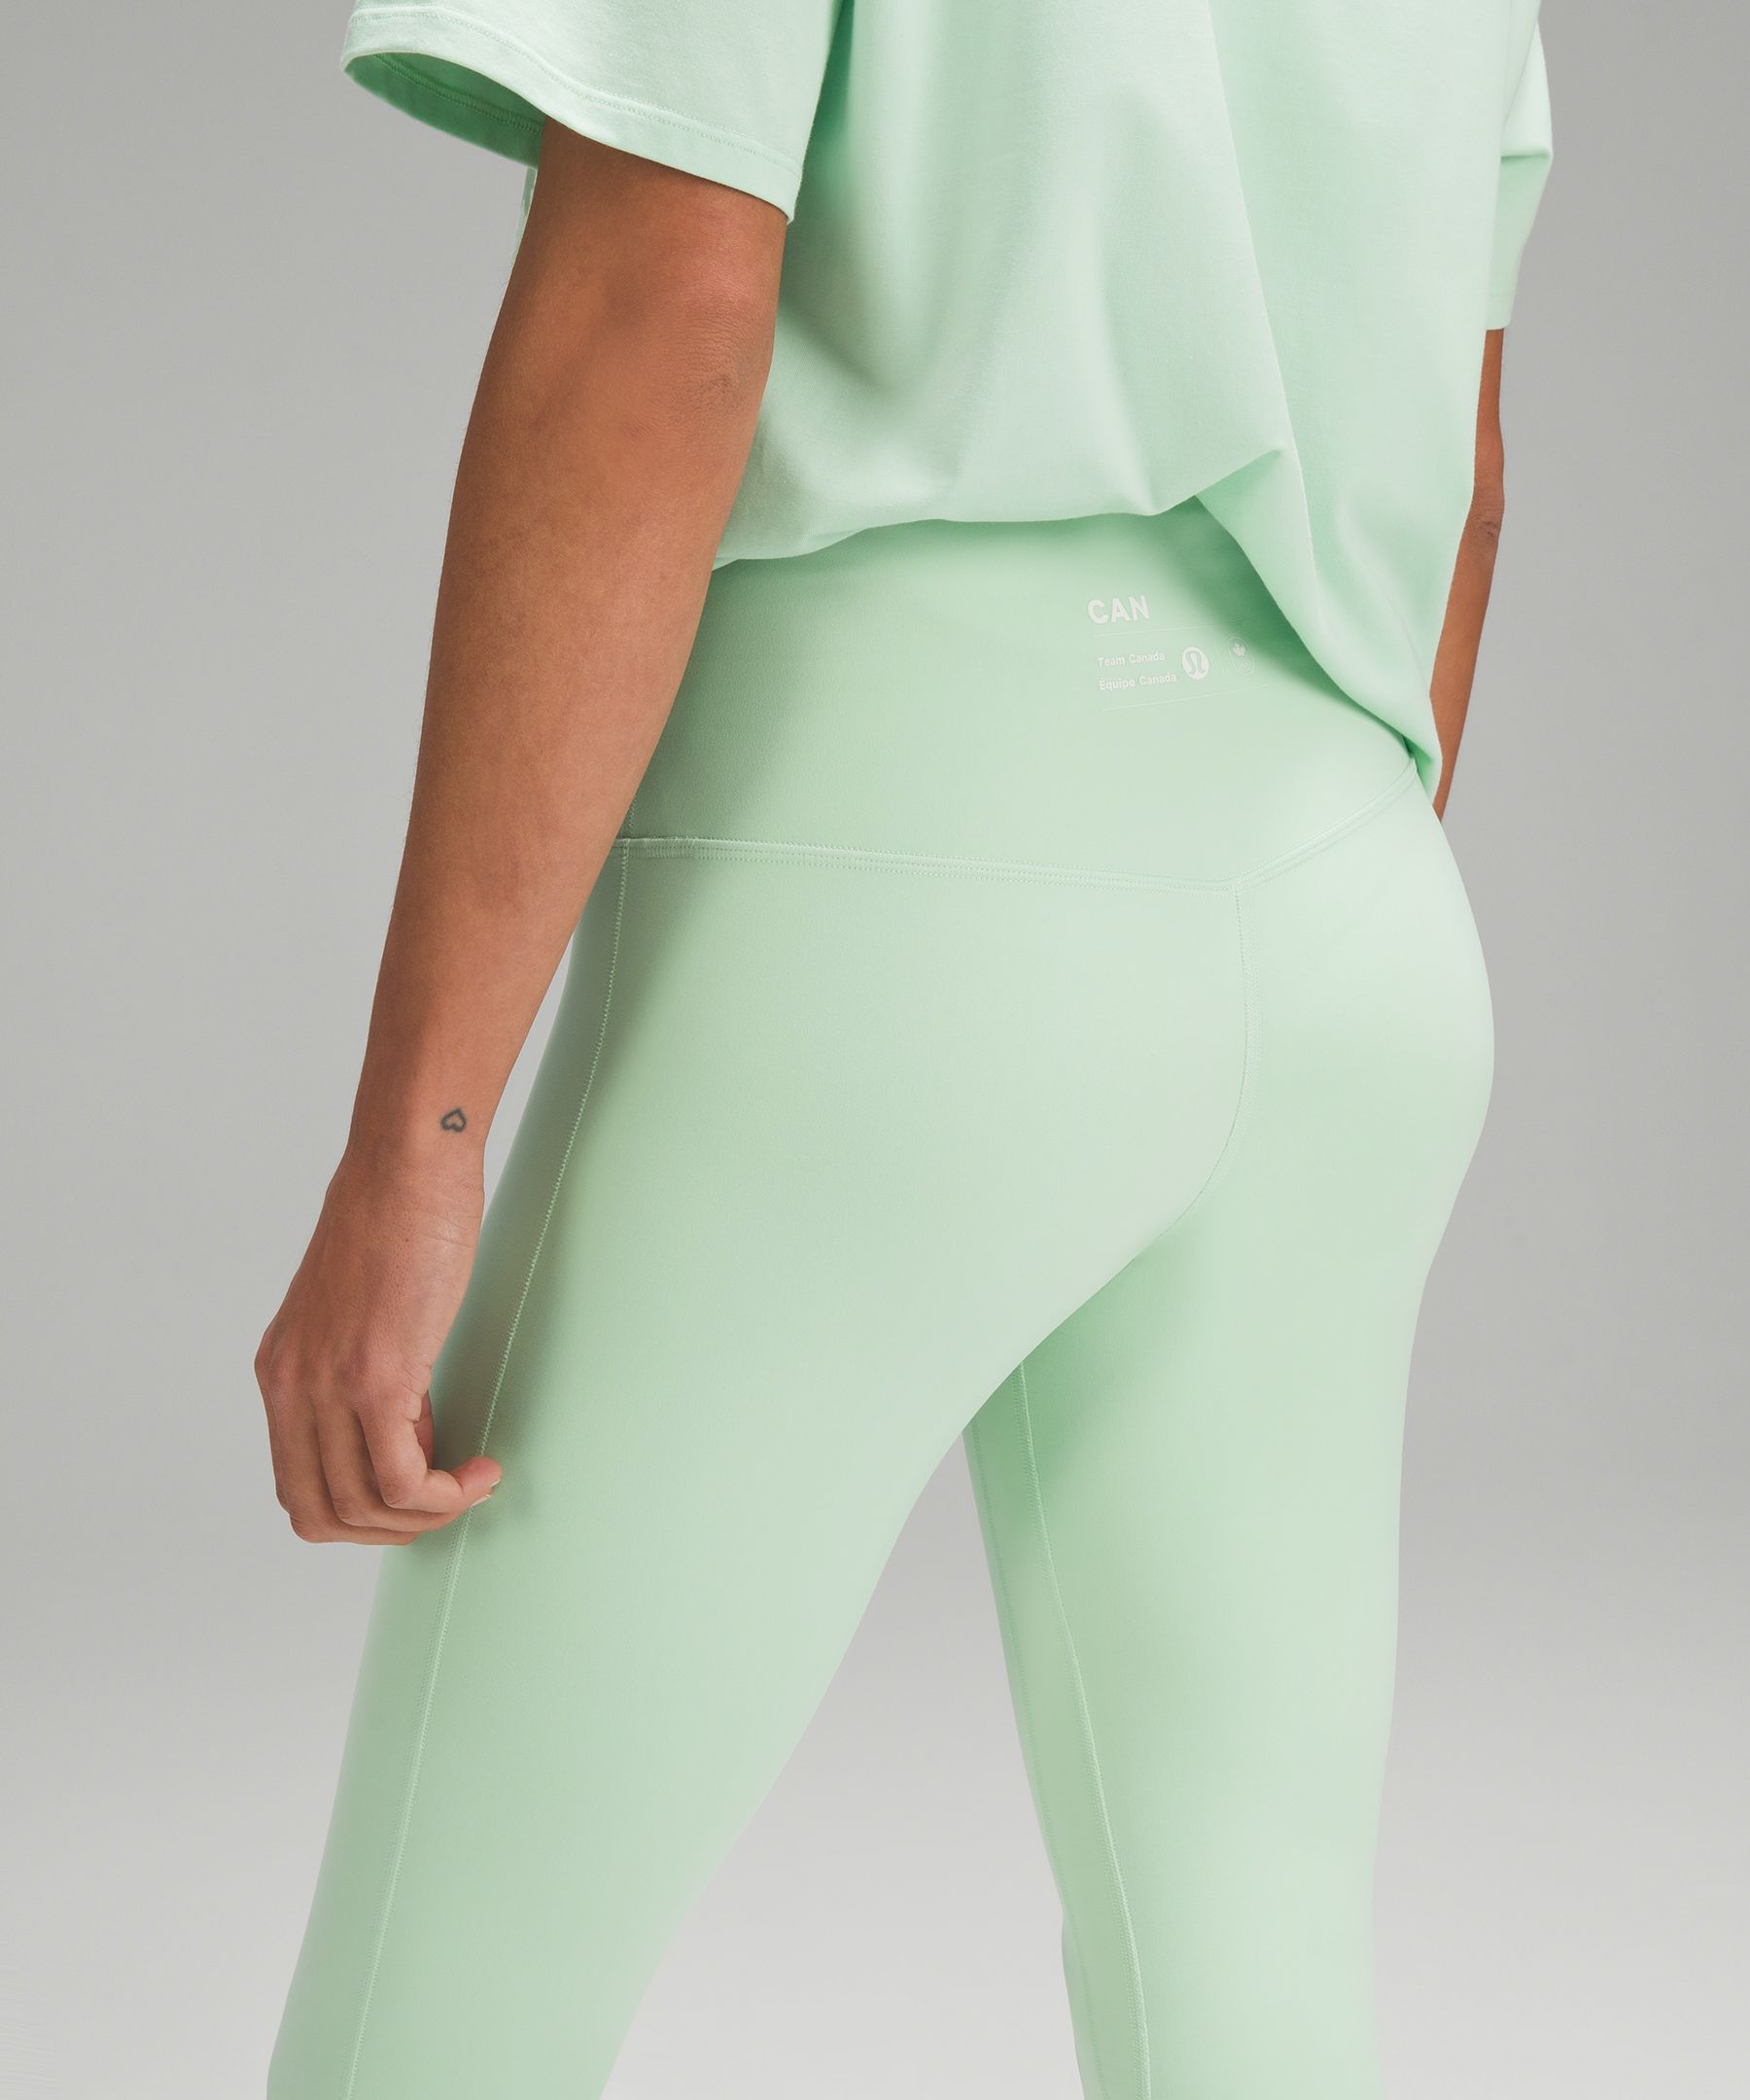 Lululemon HR align Java pants 25” inches size 4 - Athletic apparel